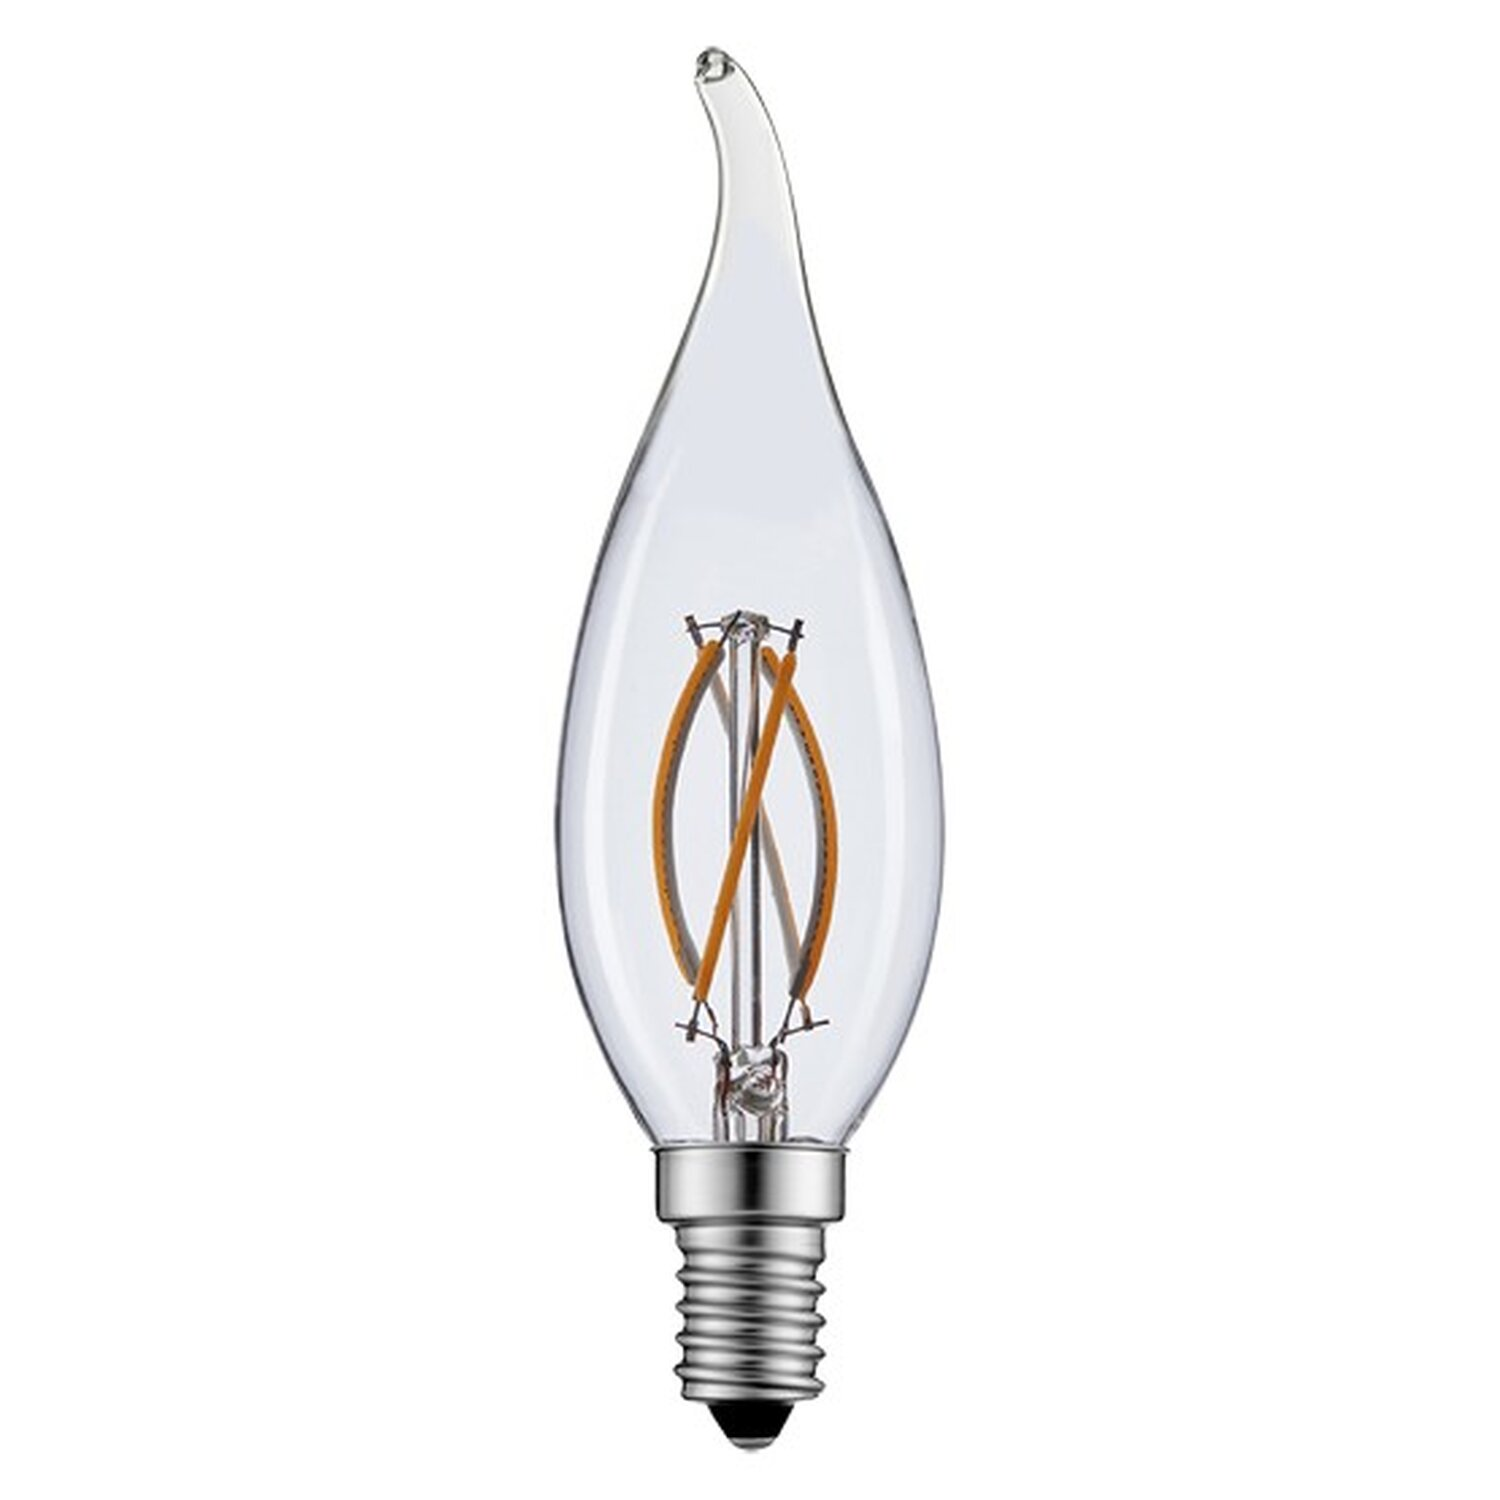 Leuchtmittel 488 Filament | F35 | LED LED | 4W | LINE Ø35mm | E14 Neutralweiß Lumen